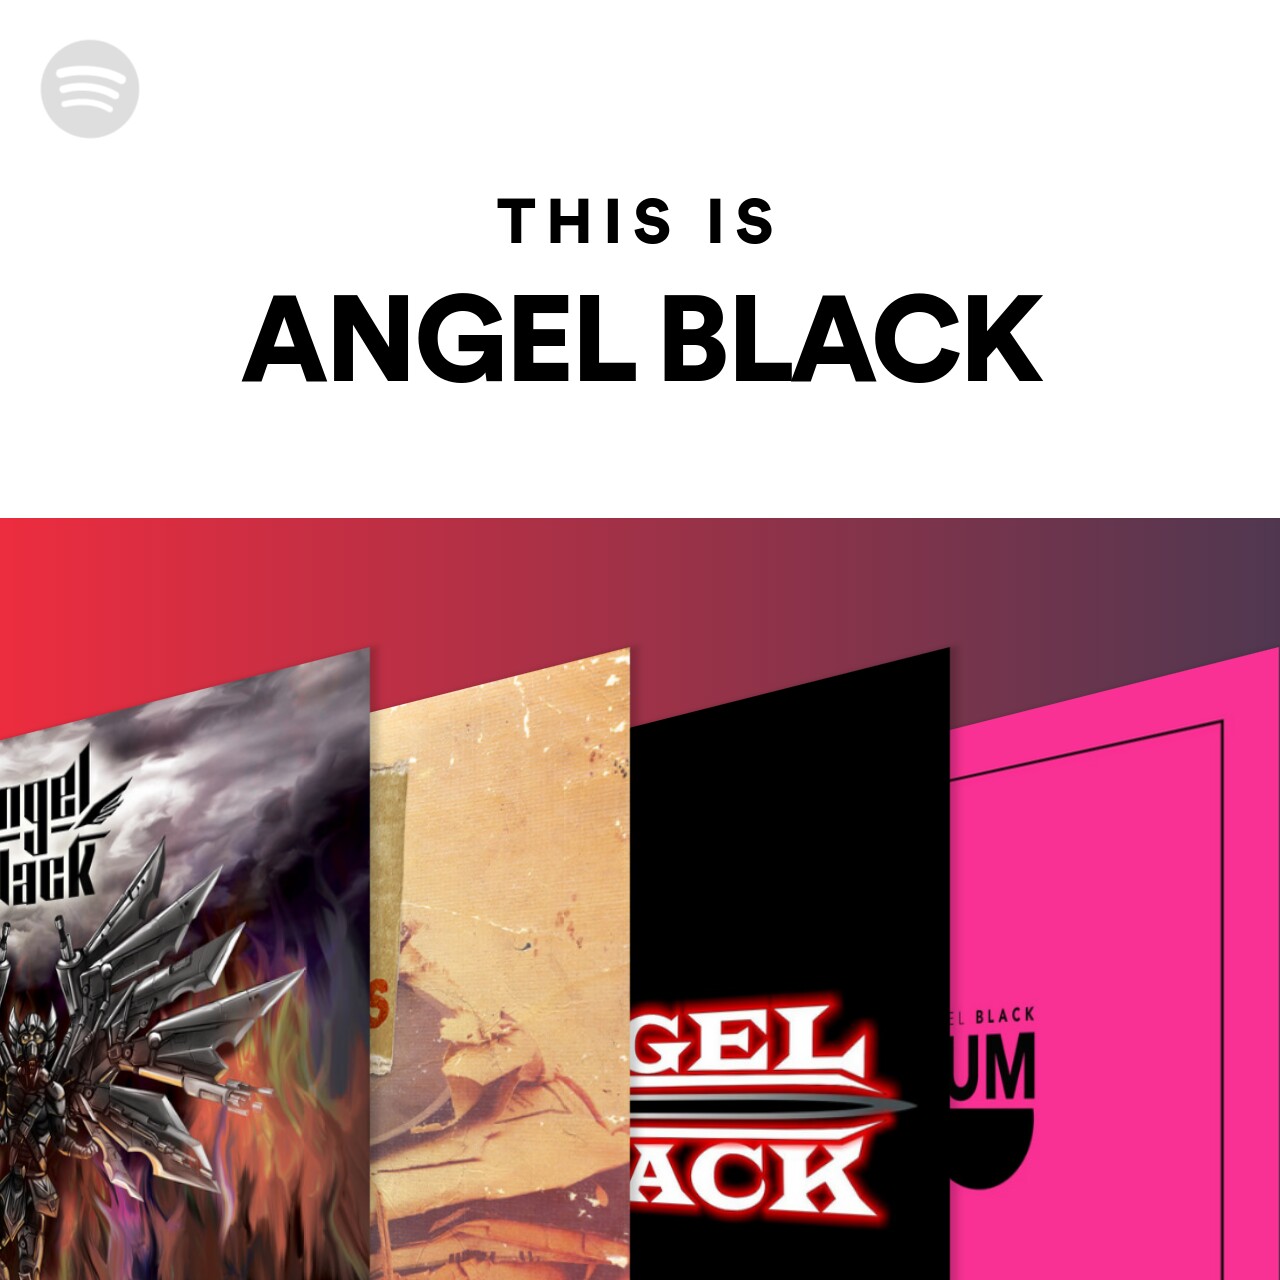 This Is ANGEL BLACK